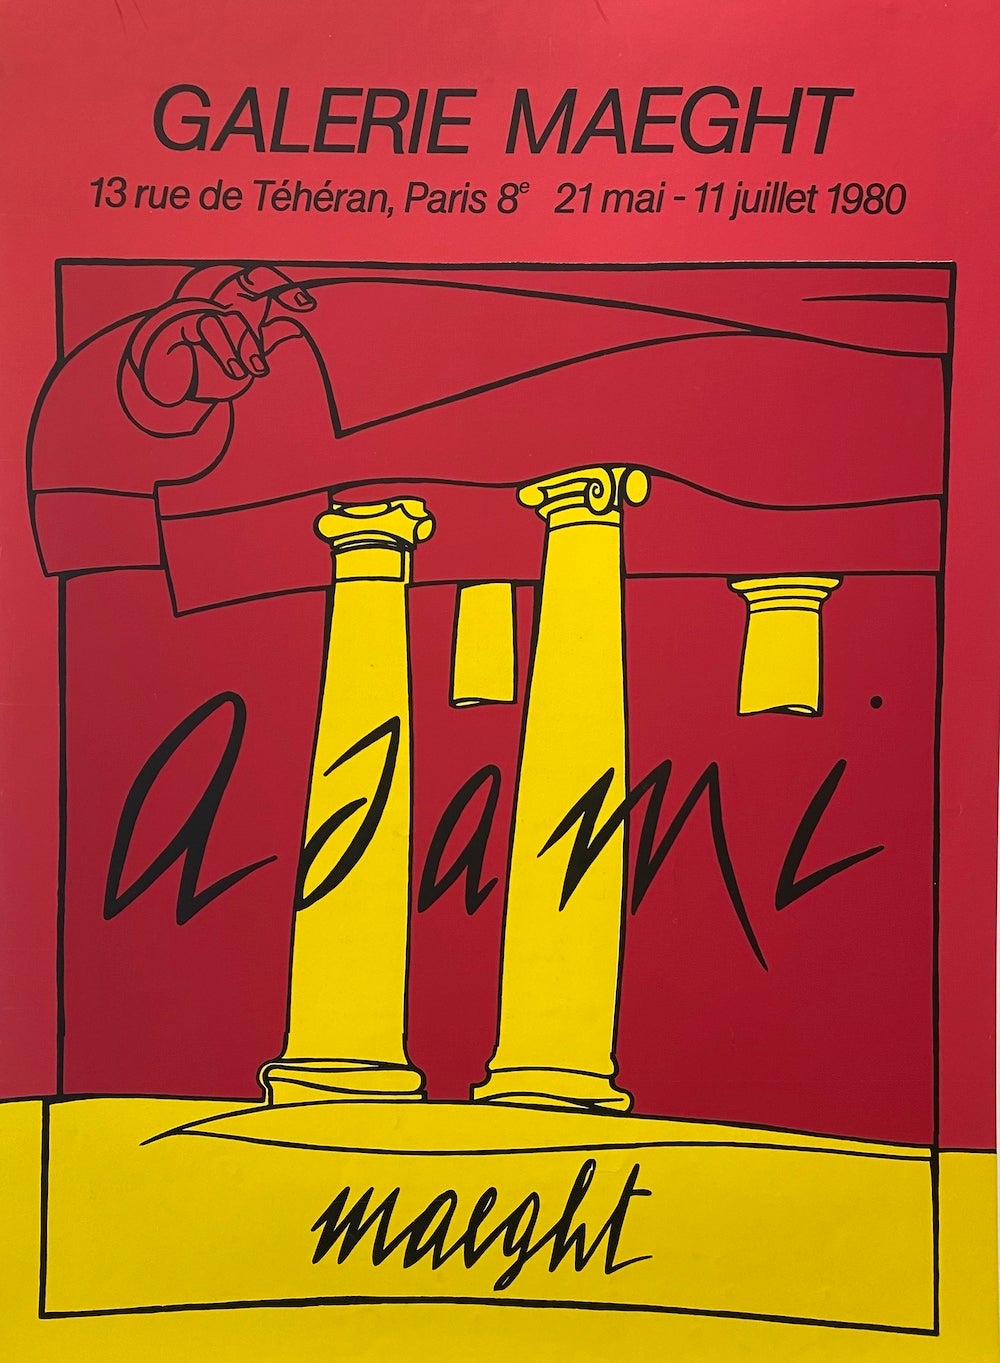 Adami Galerie Maeght Original Vintage Poster